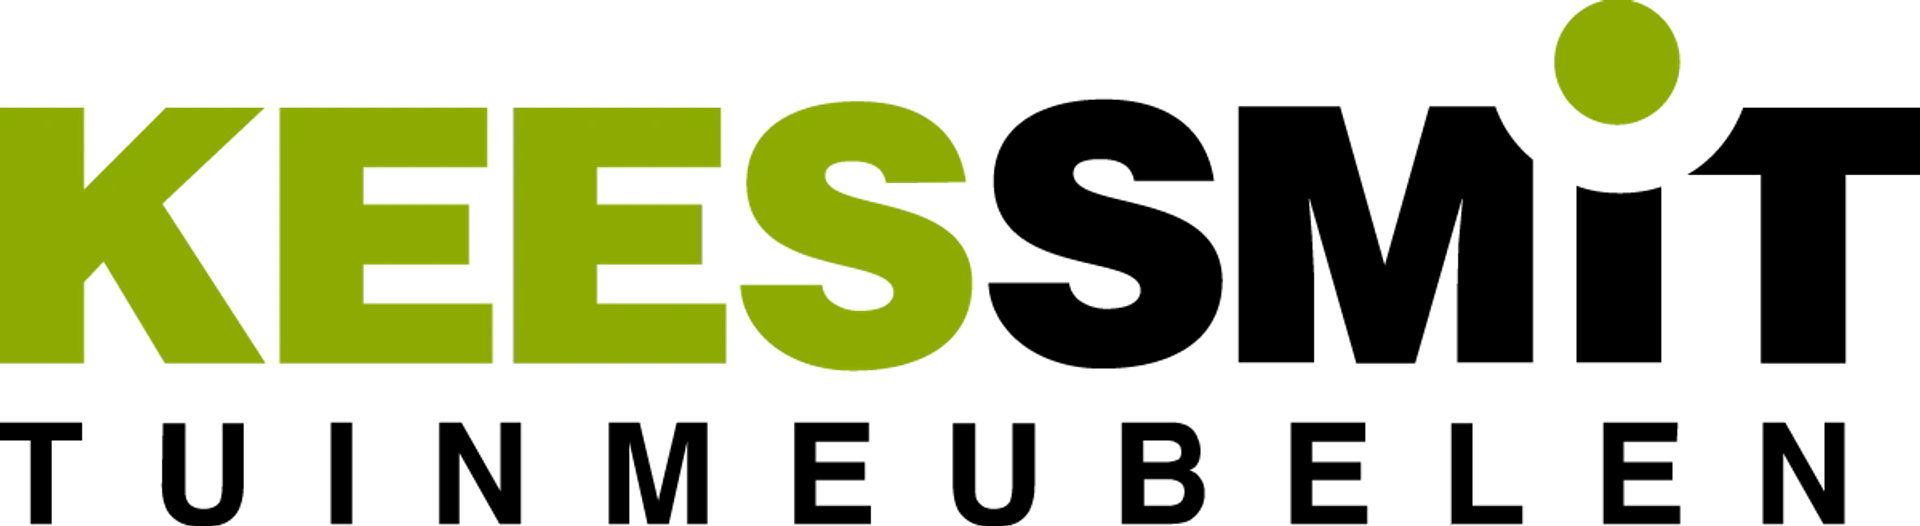 KEES SMIT logo